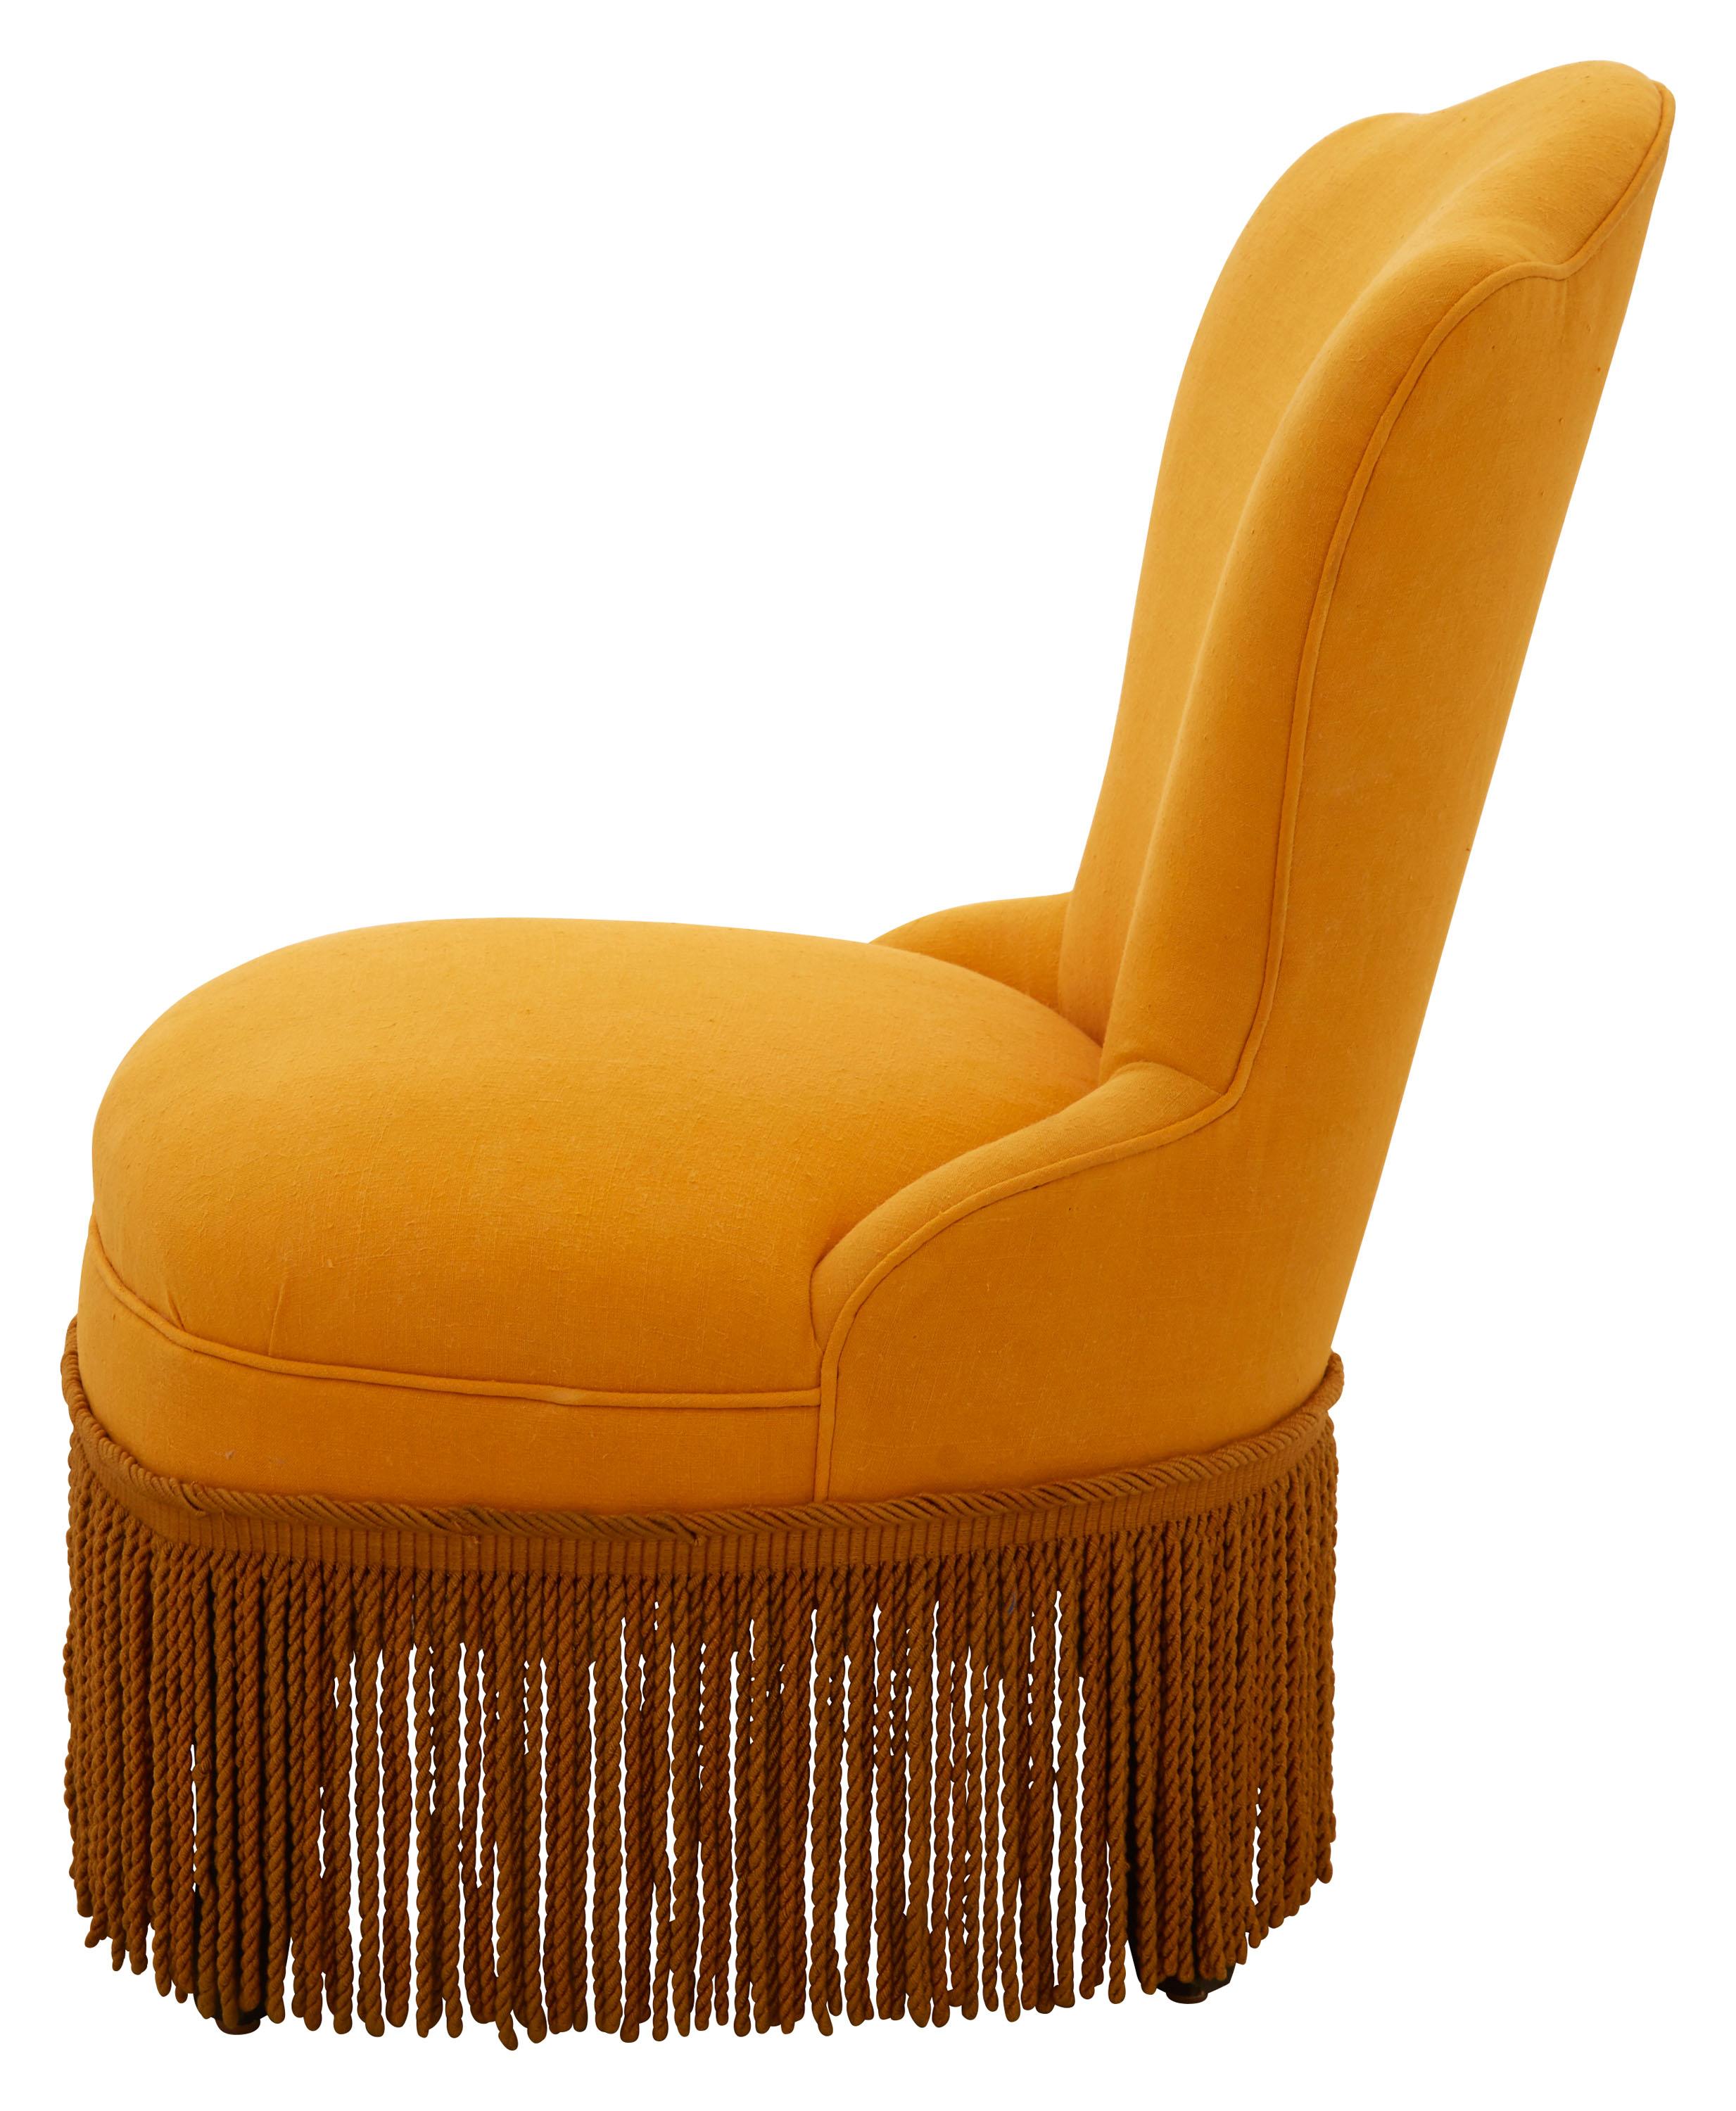 Napoleon III Late 19th Century Fringed Yellow Slipper Chair